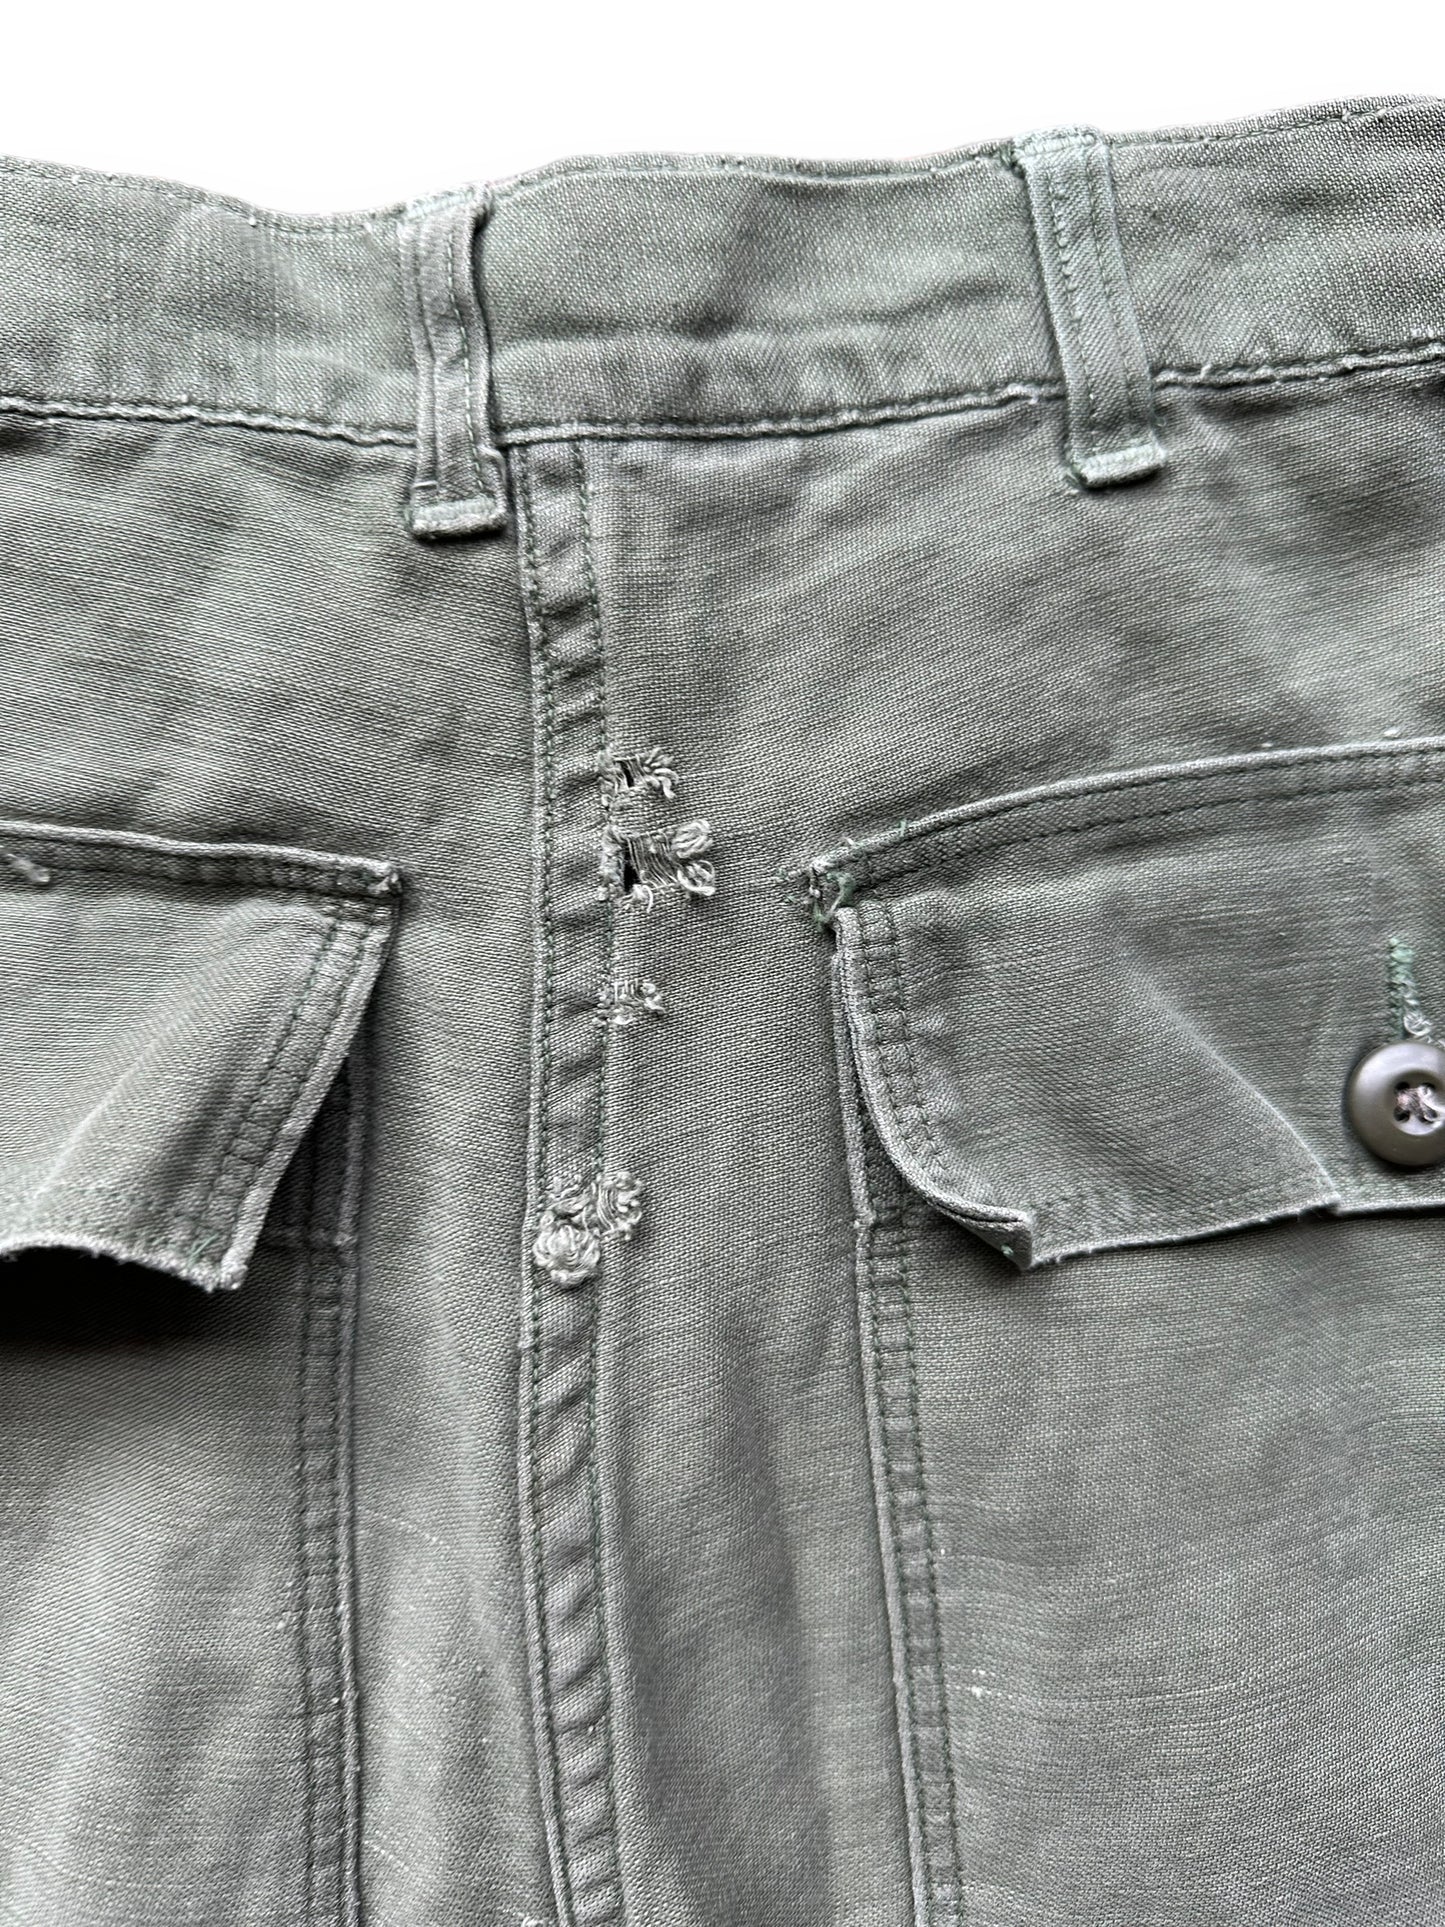 Rear Detail View of Small Holes on Rear of Vintage Sateen OG-107's W30 L32.5 | Vintage Viet Nam Era Baker Pants Seattle | Barn Owl Vintage Workwear